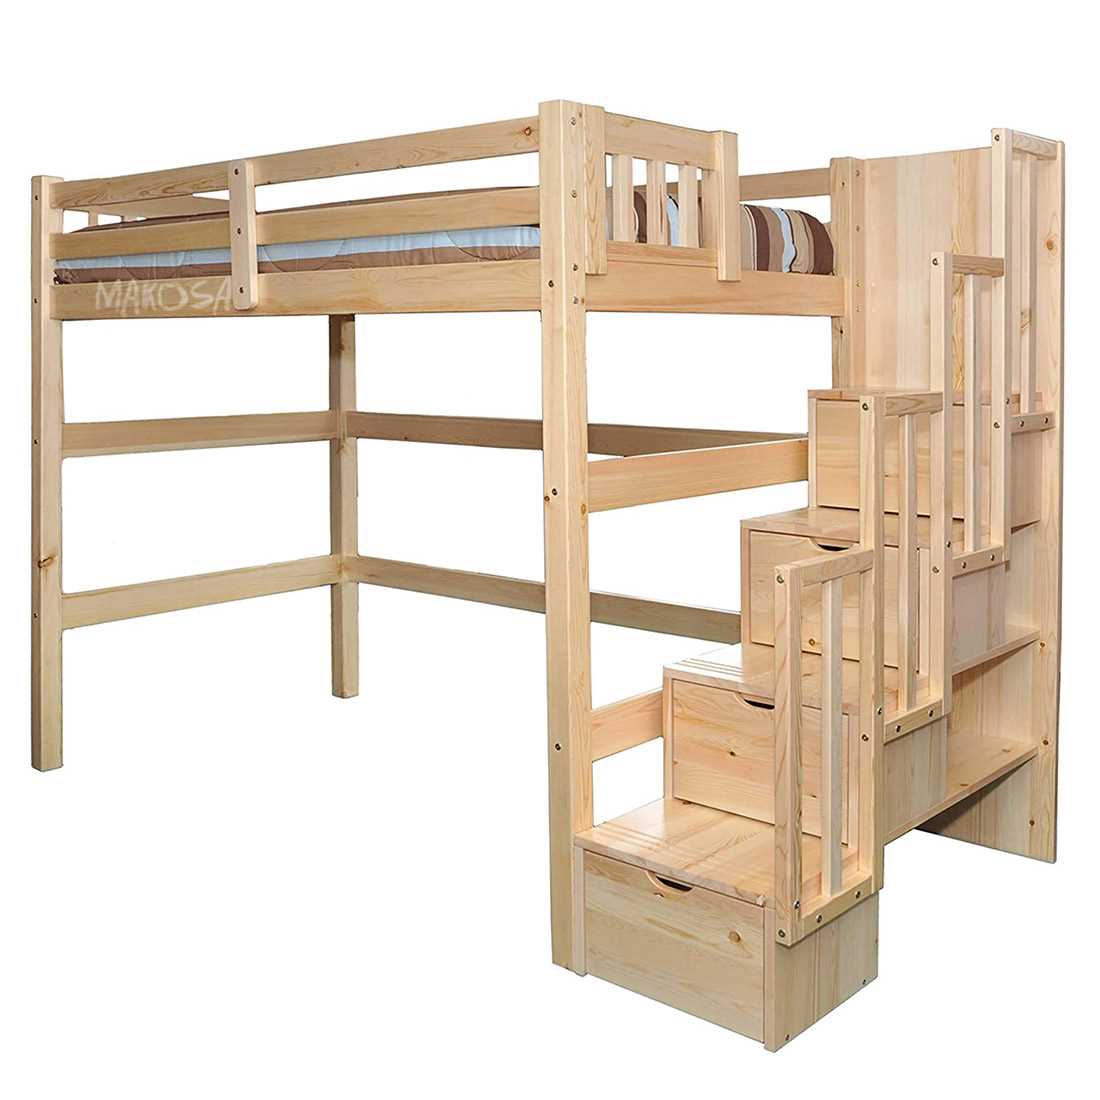 Разновидности кровати-чердака из массива дерева